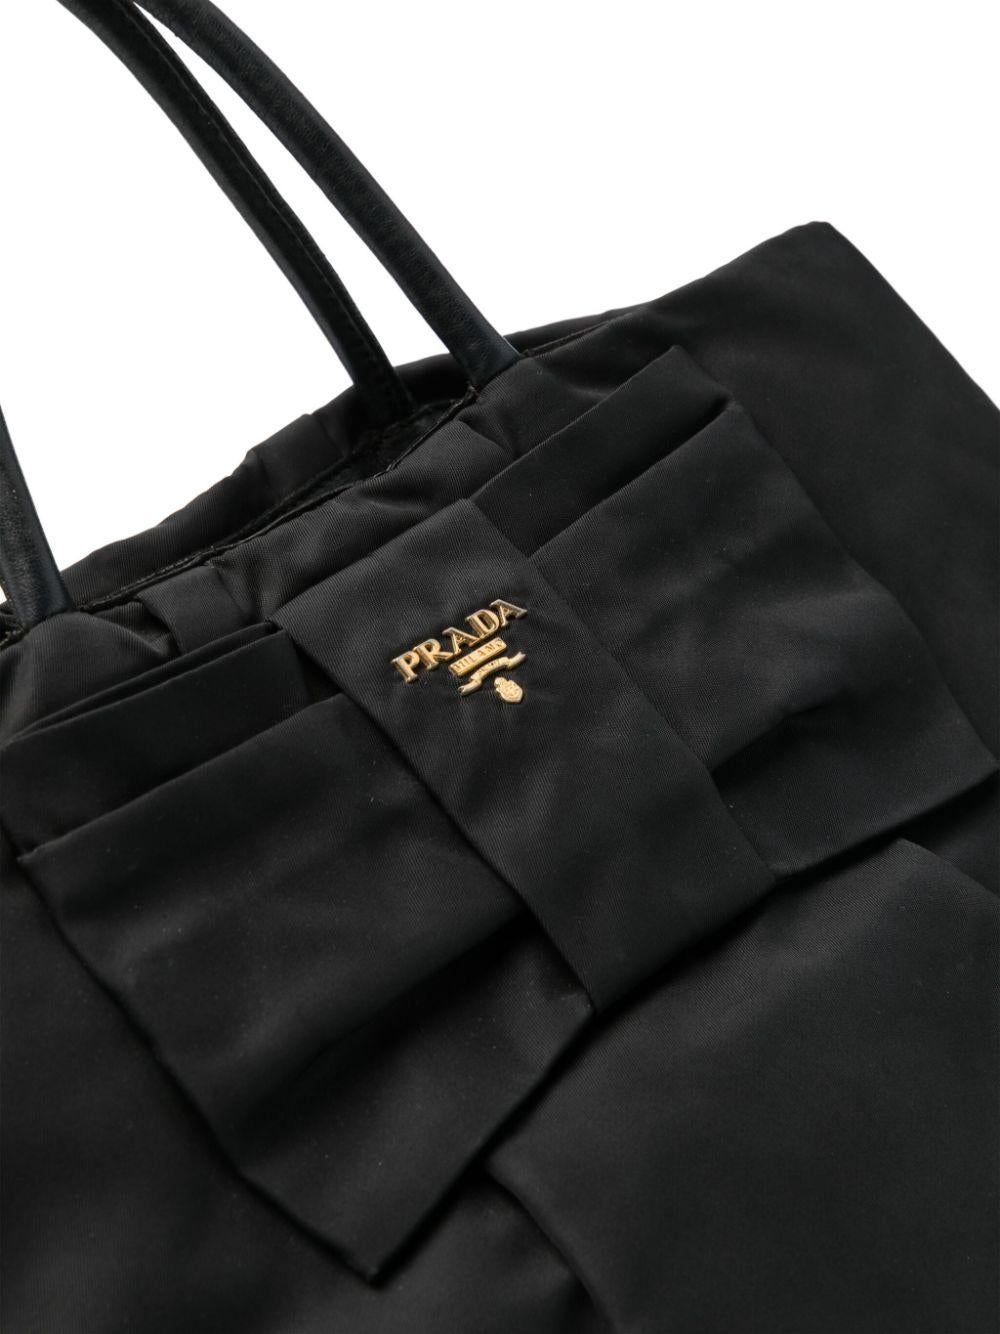 Prada Black Nylon Bow-Detail Handbag In Good Condition For Sale In Paris, FR